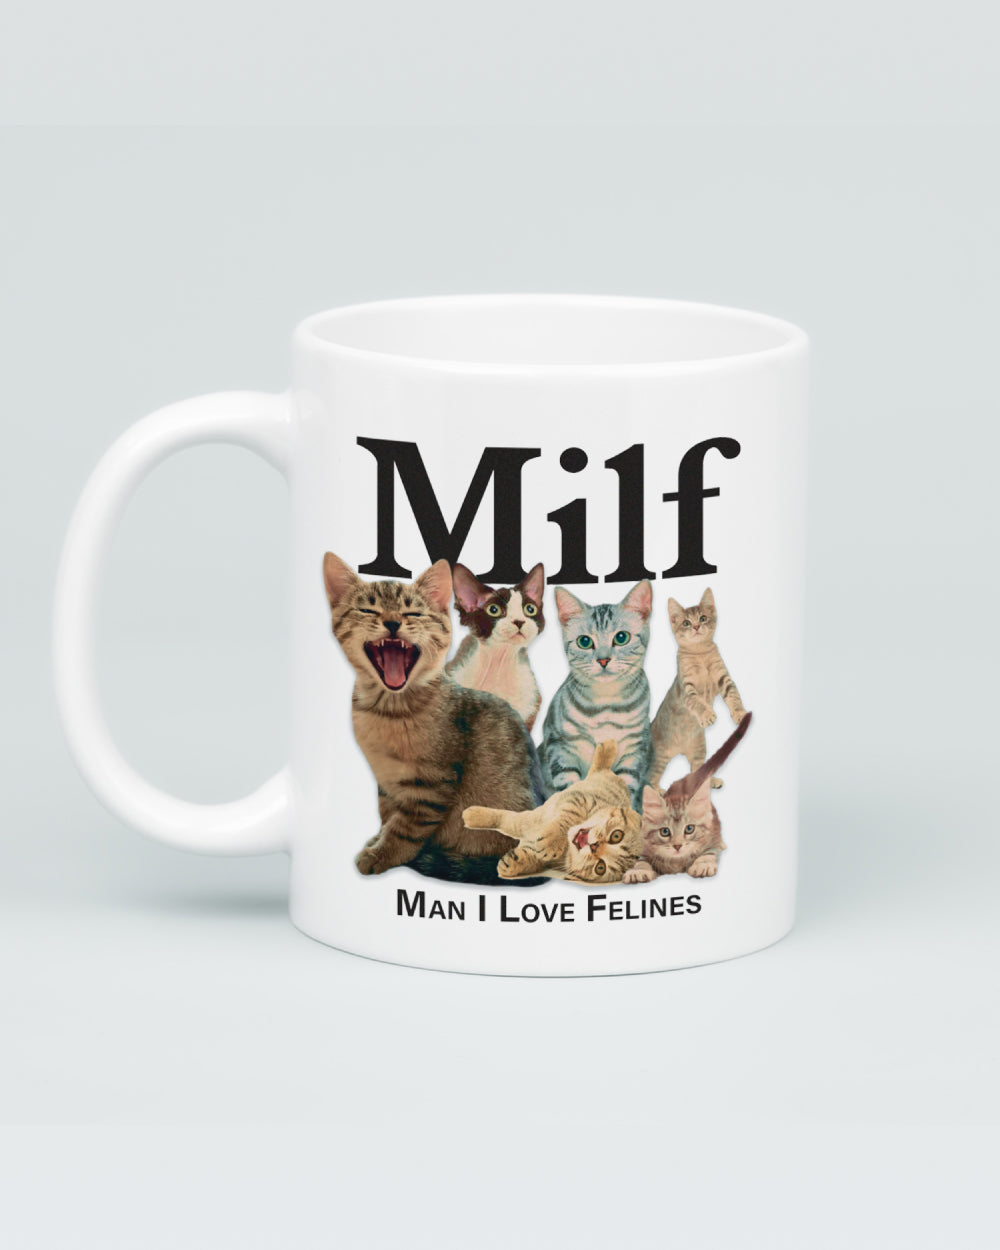 Man I Love Felines Mug